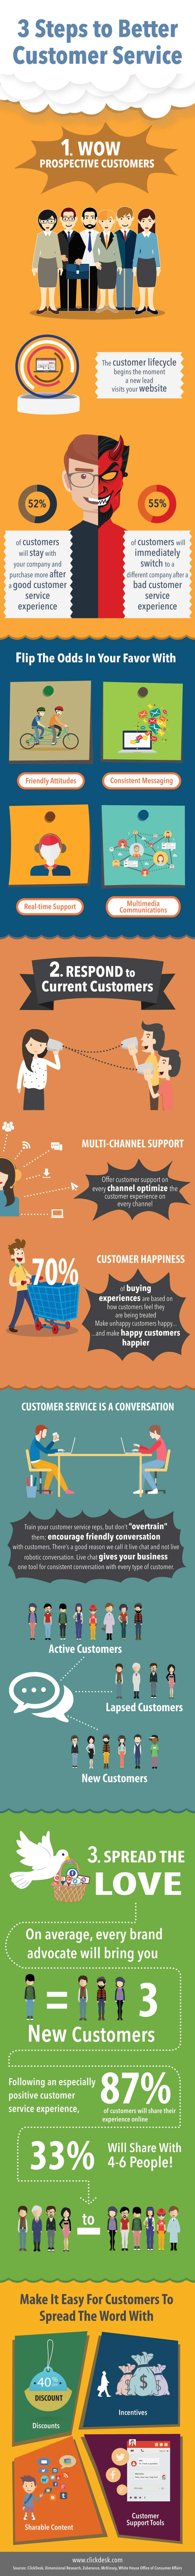 3 Ways to Better Customer Service